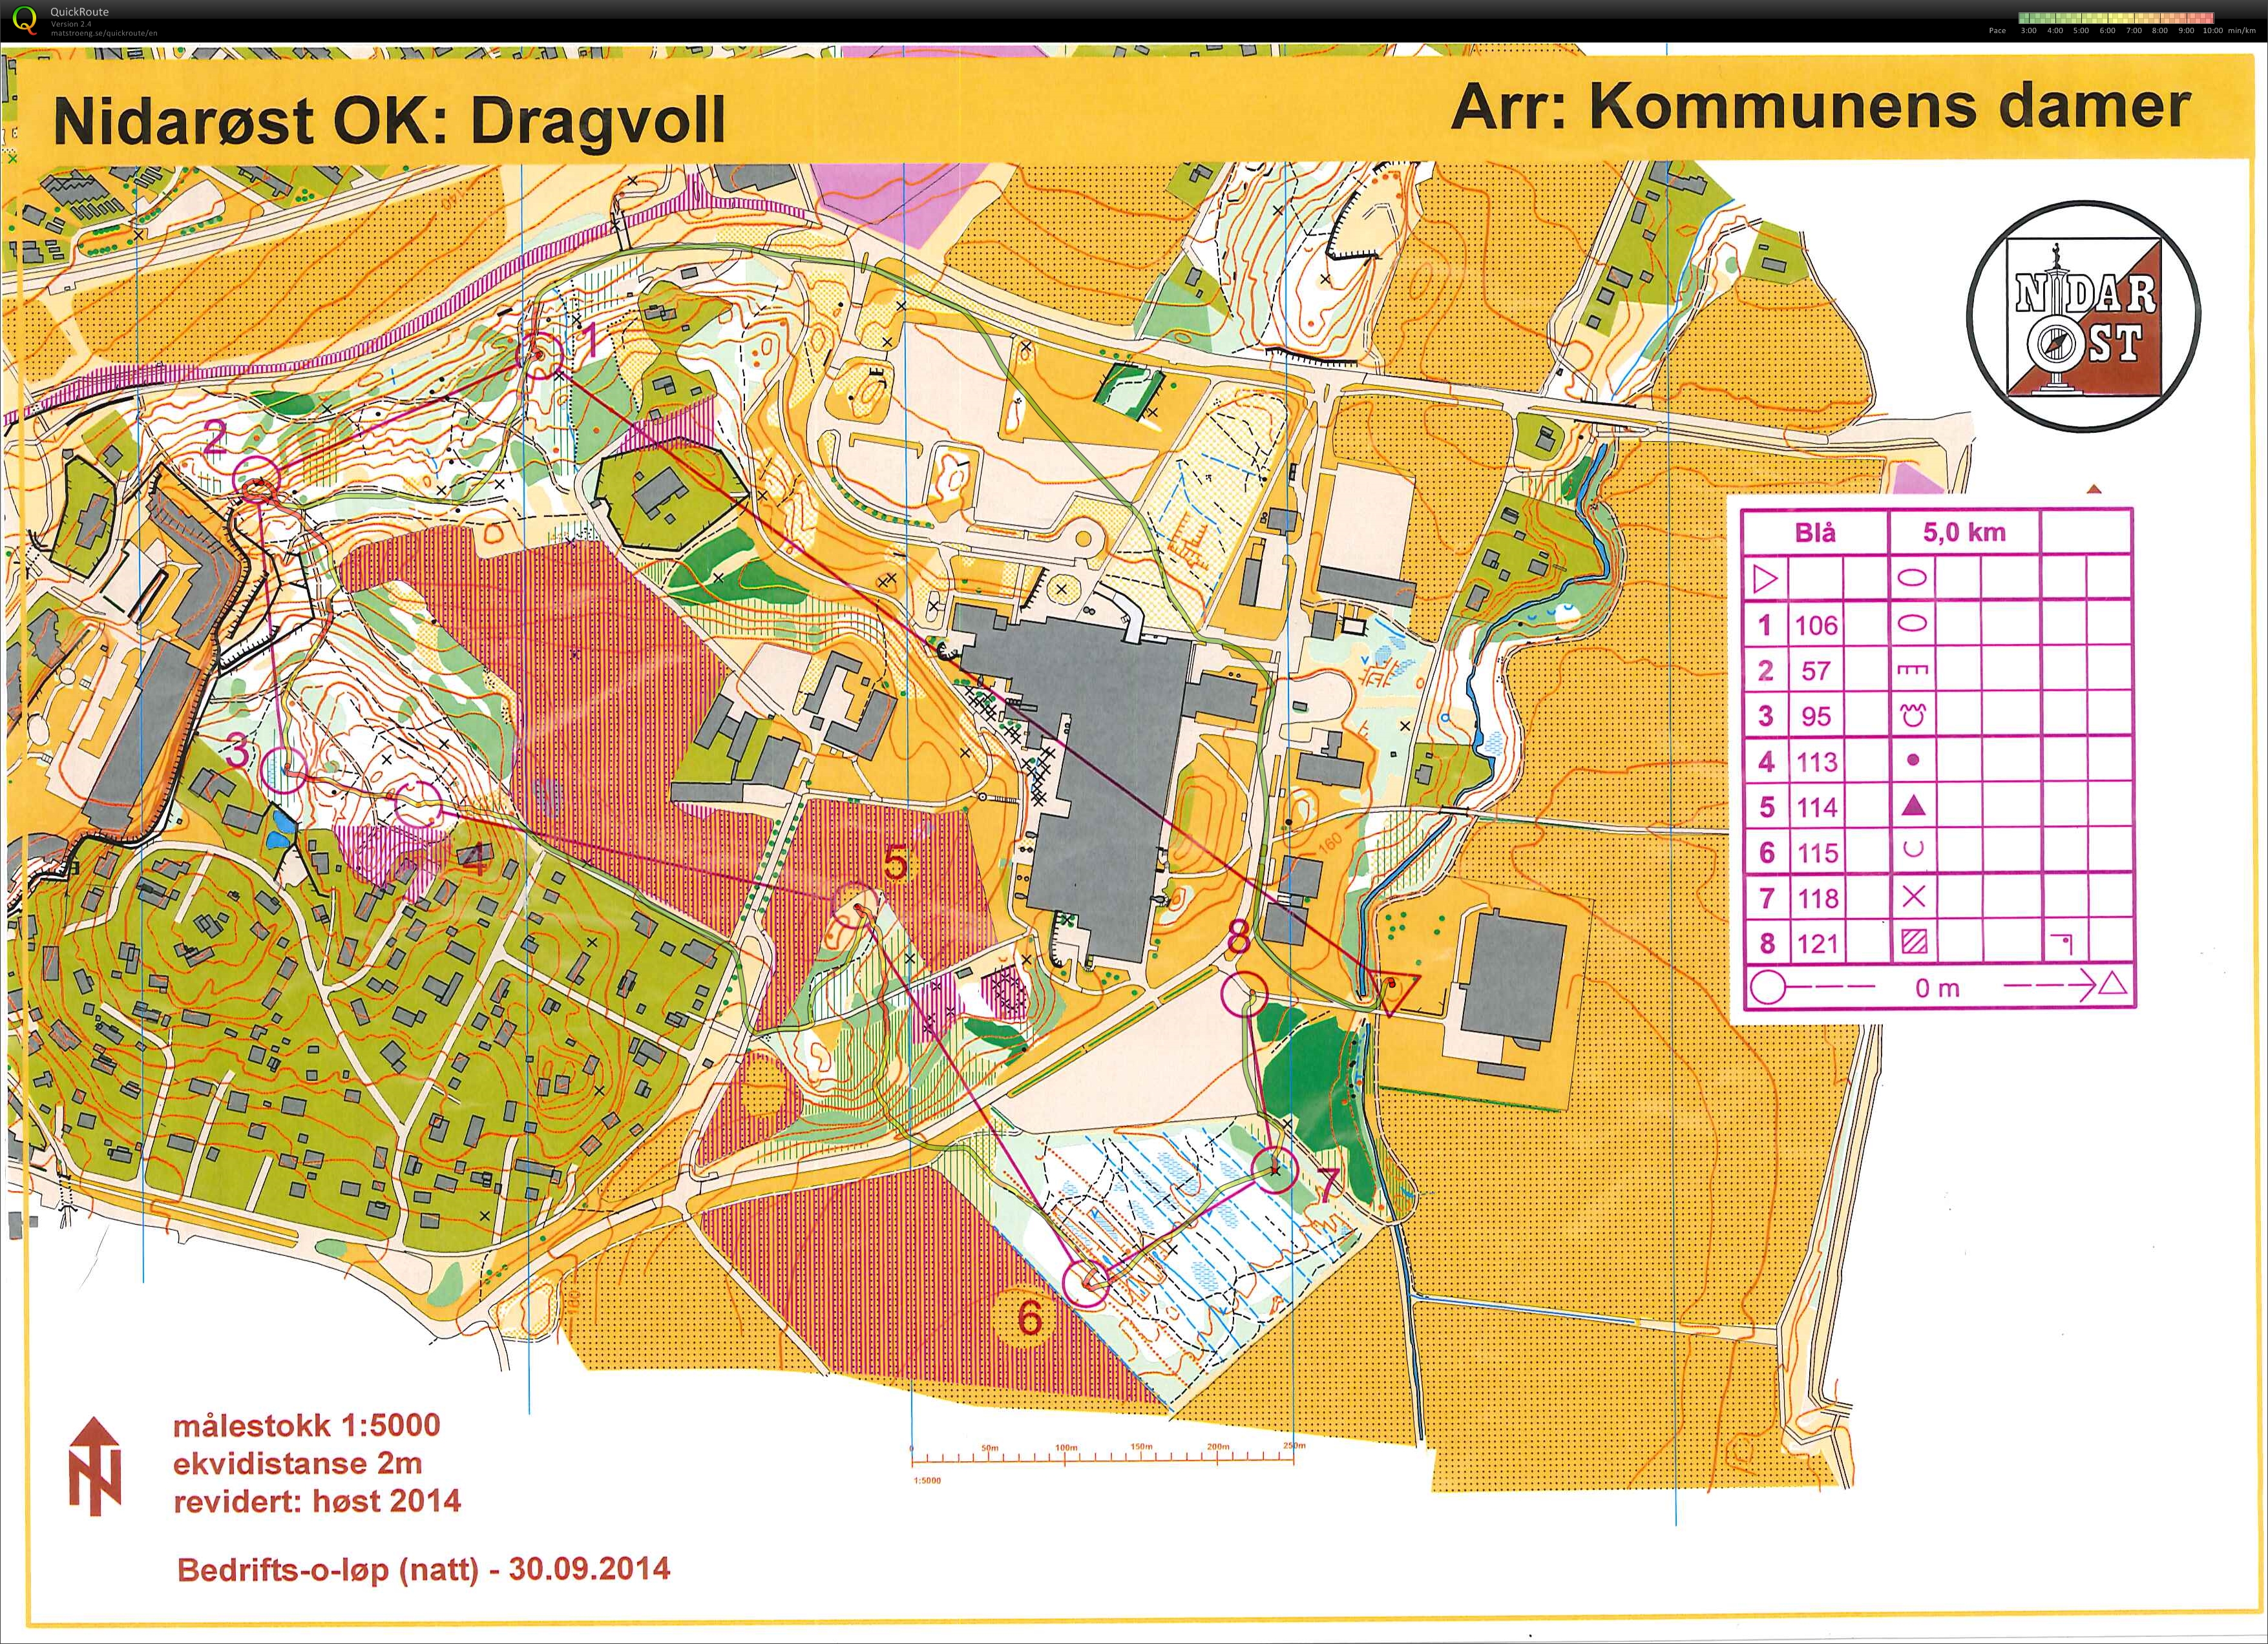 Bedrifts o-løp natt Dragvoll, del 1 (30/09/2014)